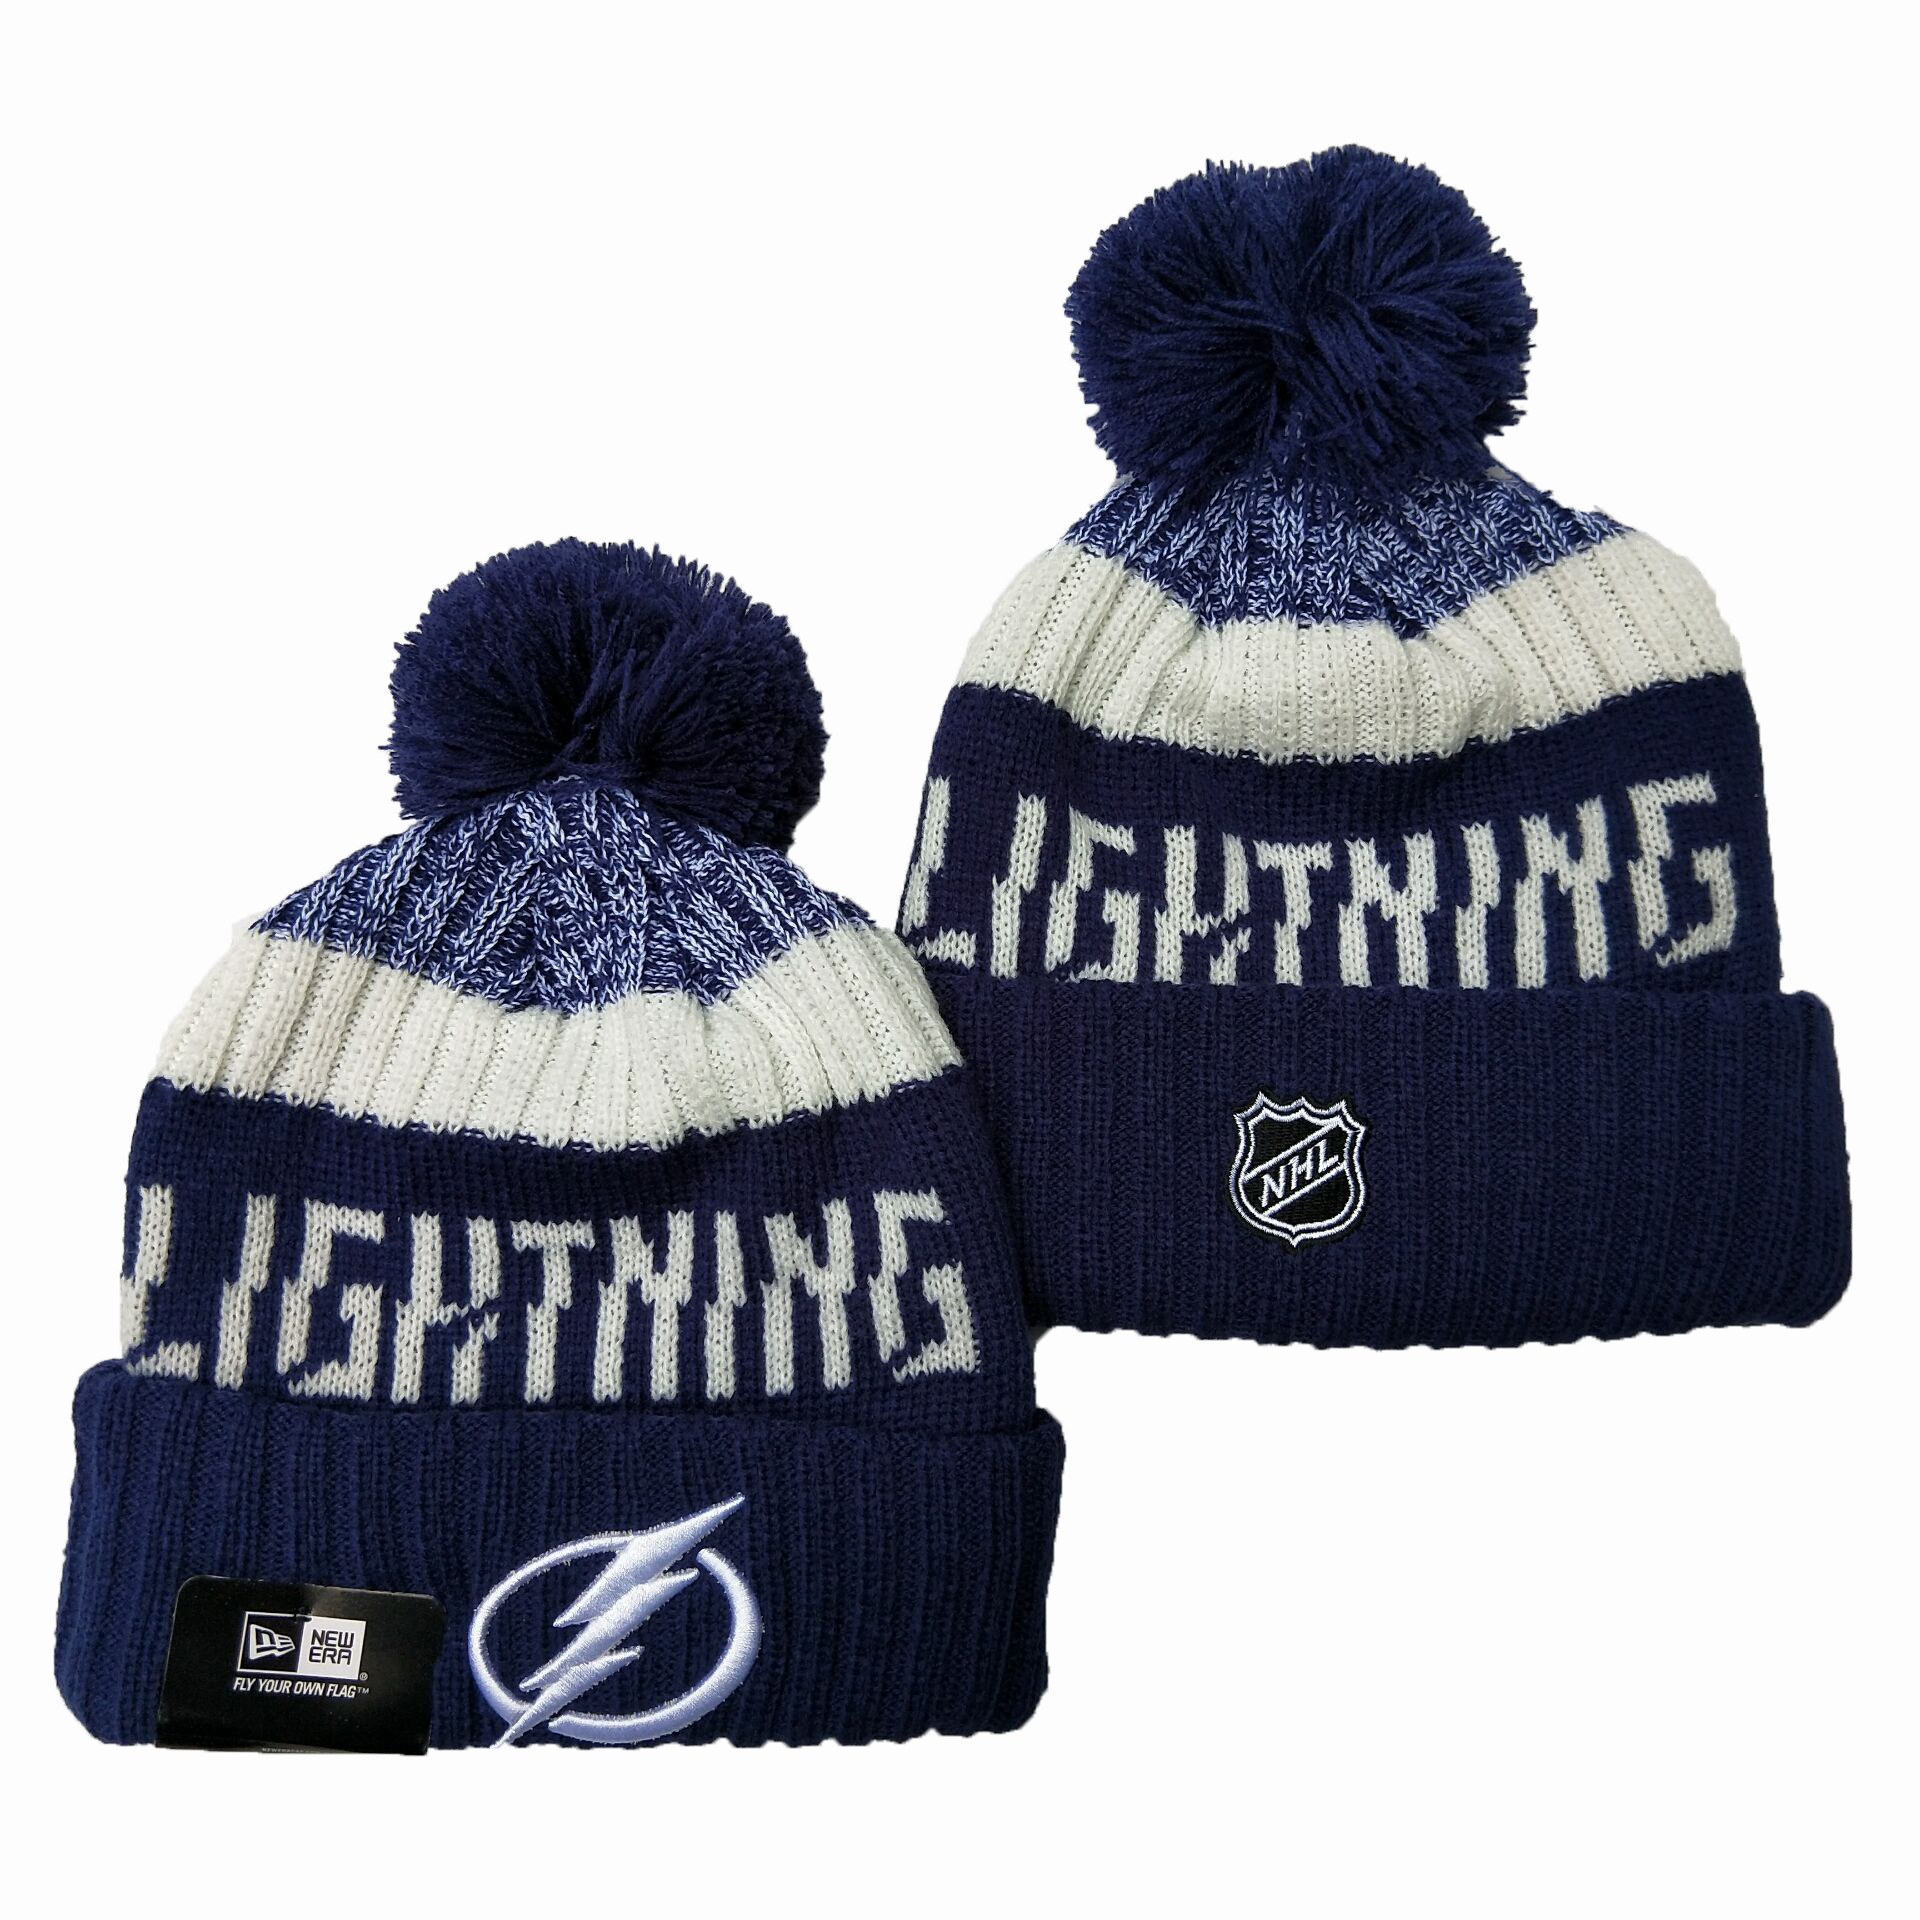 Tampa Bay Lightning Knit Hats -1